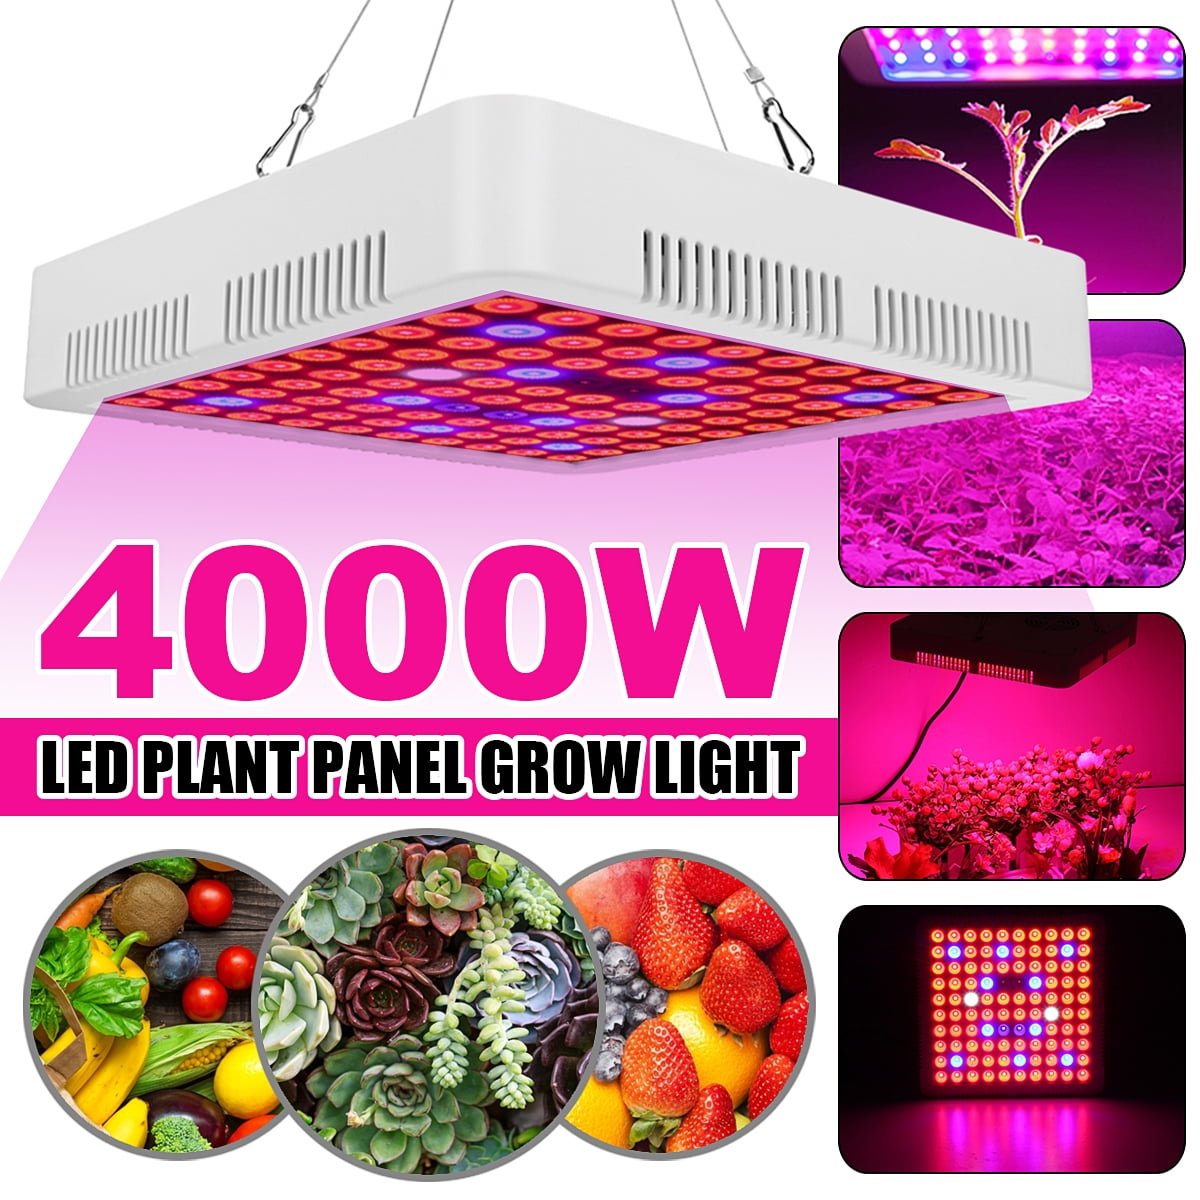 2000W LED Grow Light Hydroponic Full Spectrum Flower Grow Lamp Panel KS 